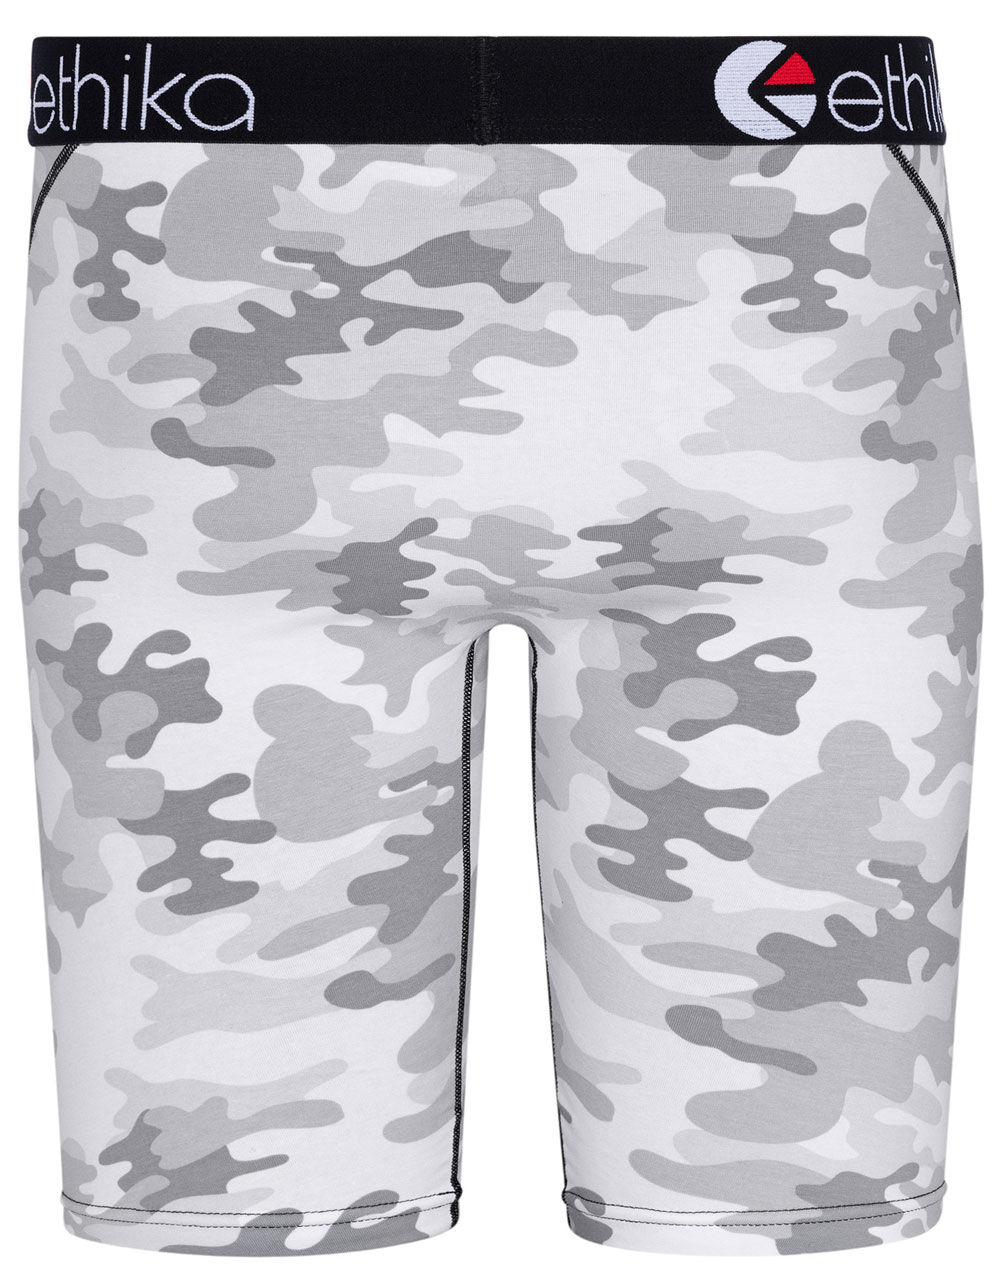 Camouflage Shark Ethika Man Underwear Boxer Briefs Sports Pants US Size  S-3XL